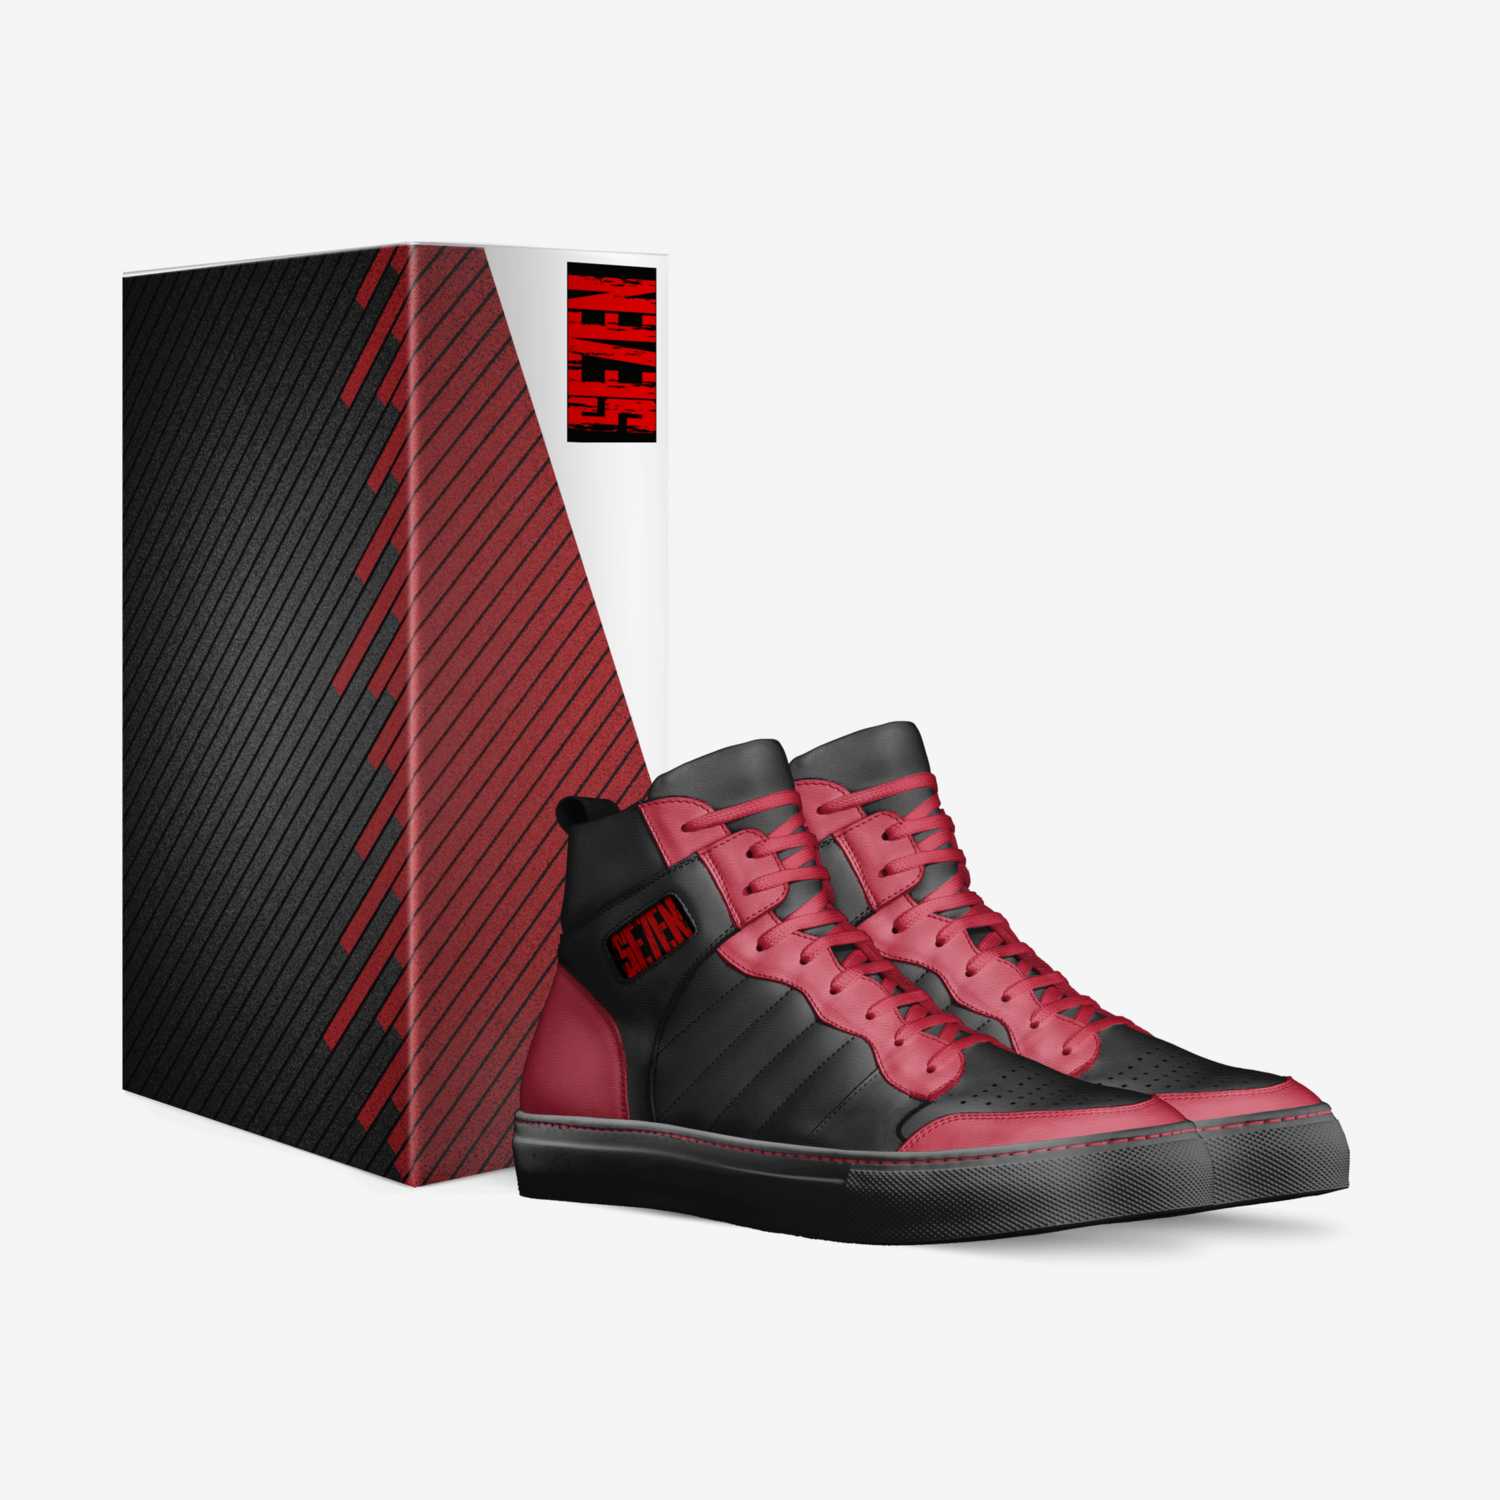 SE7EN custom made in Italy shoes by Matthew Hale | Box view